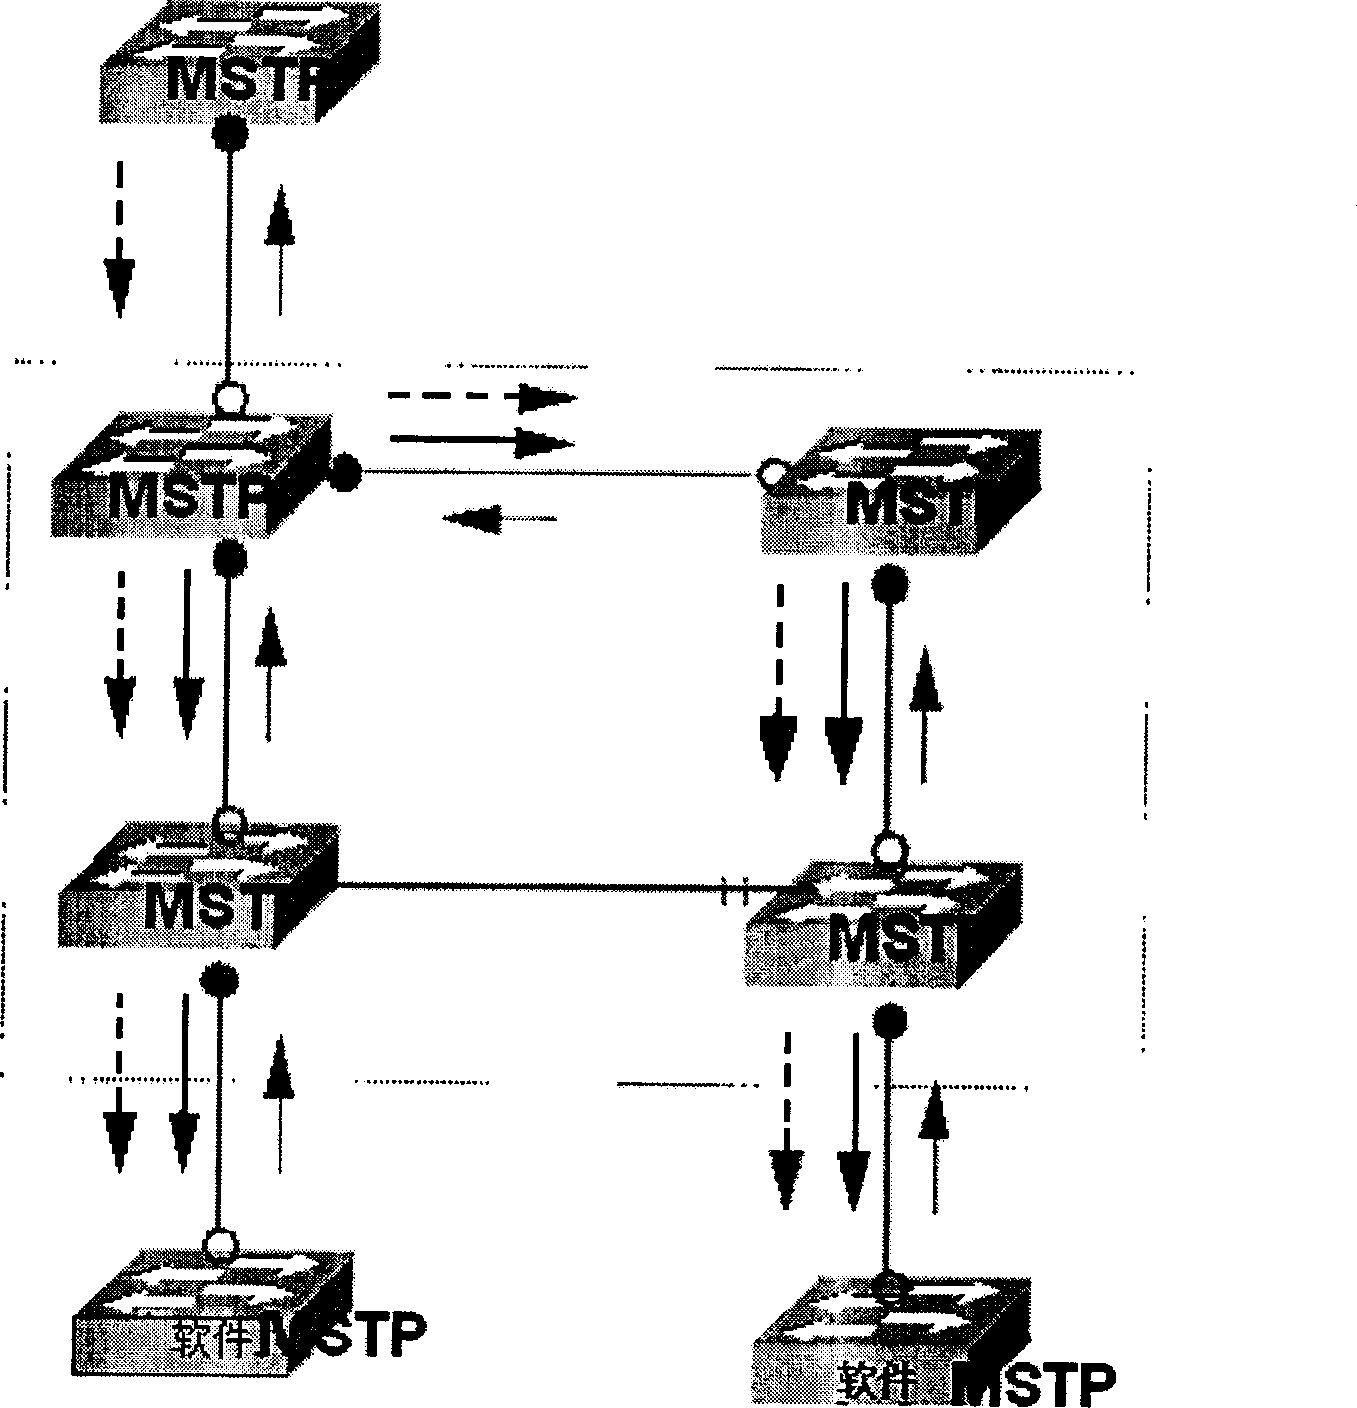 Method for realizing multiple spanning tree software simulation